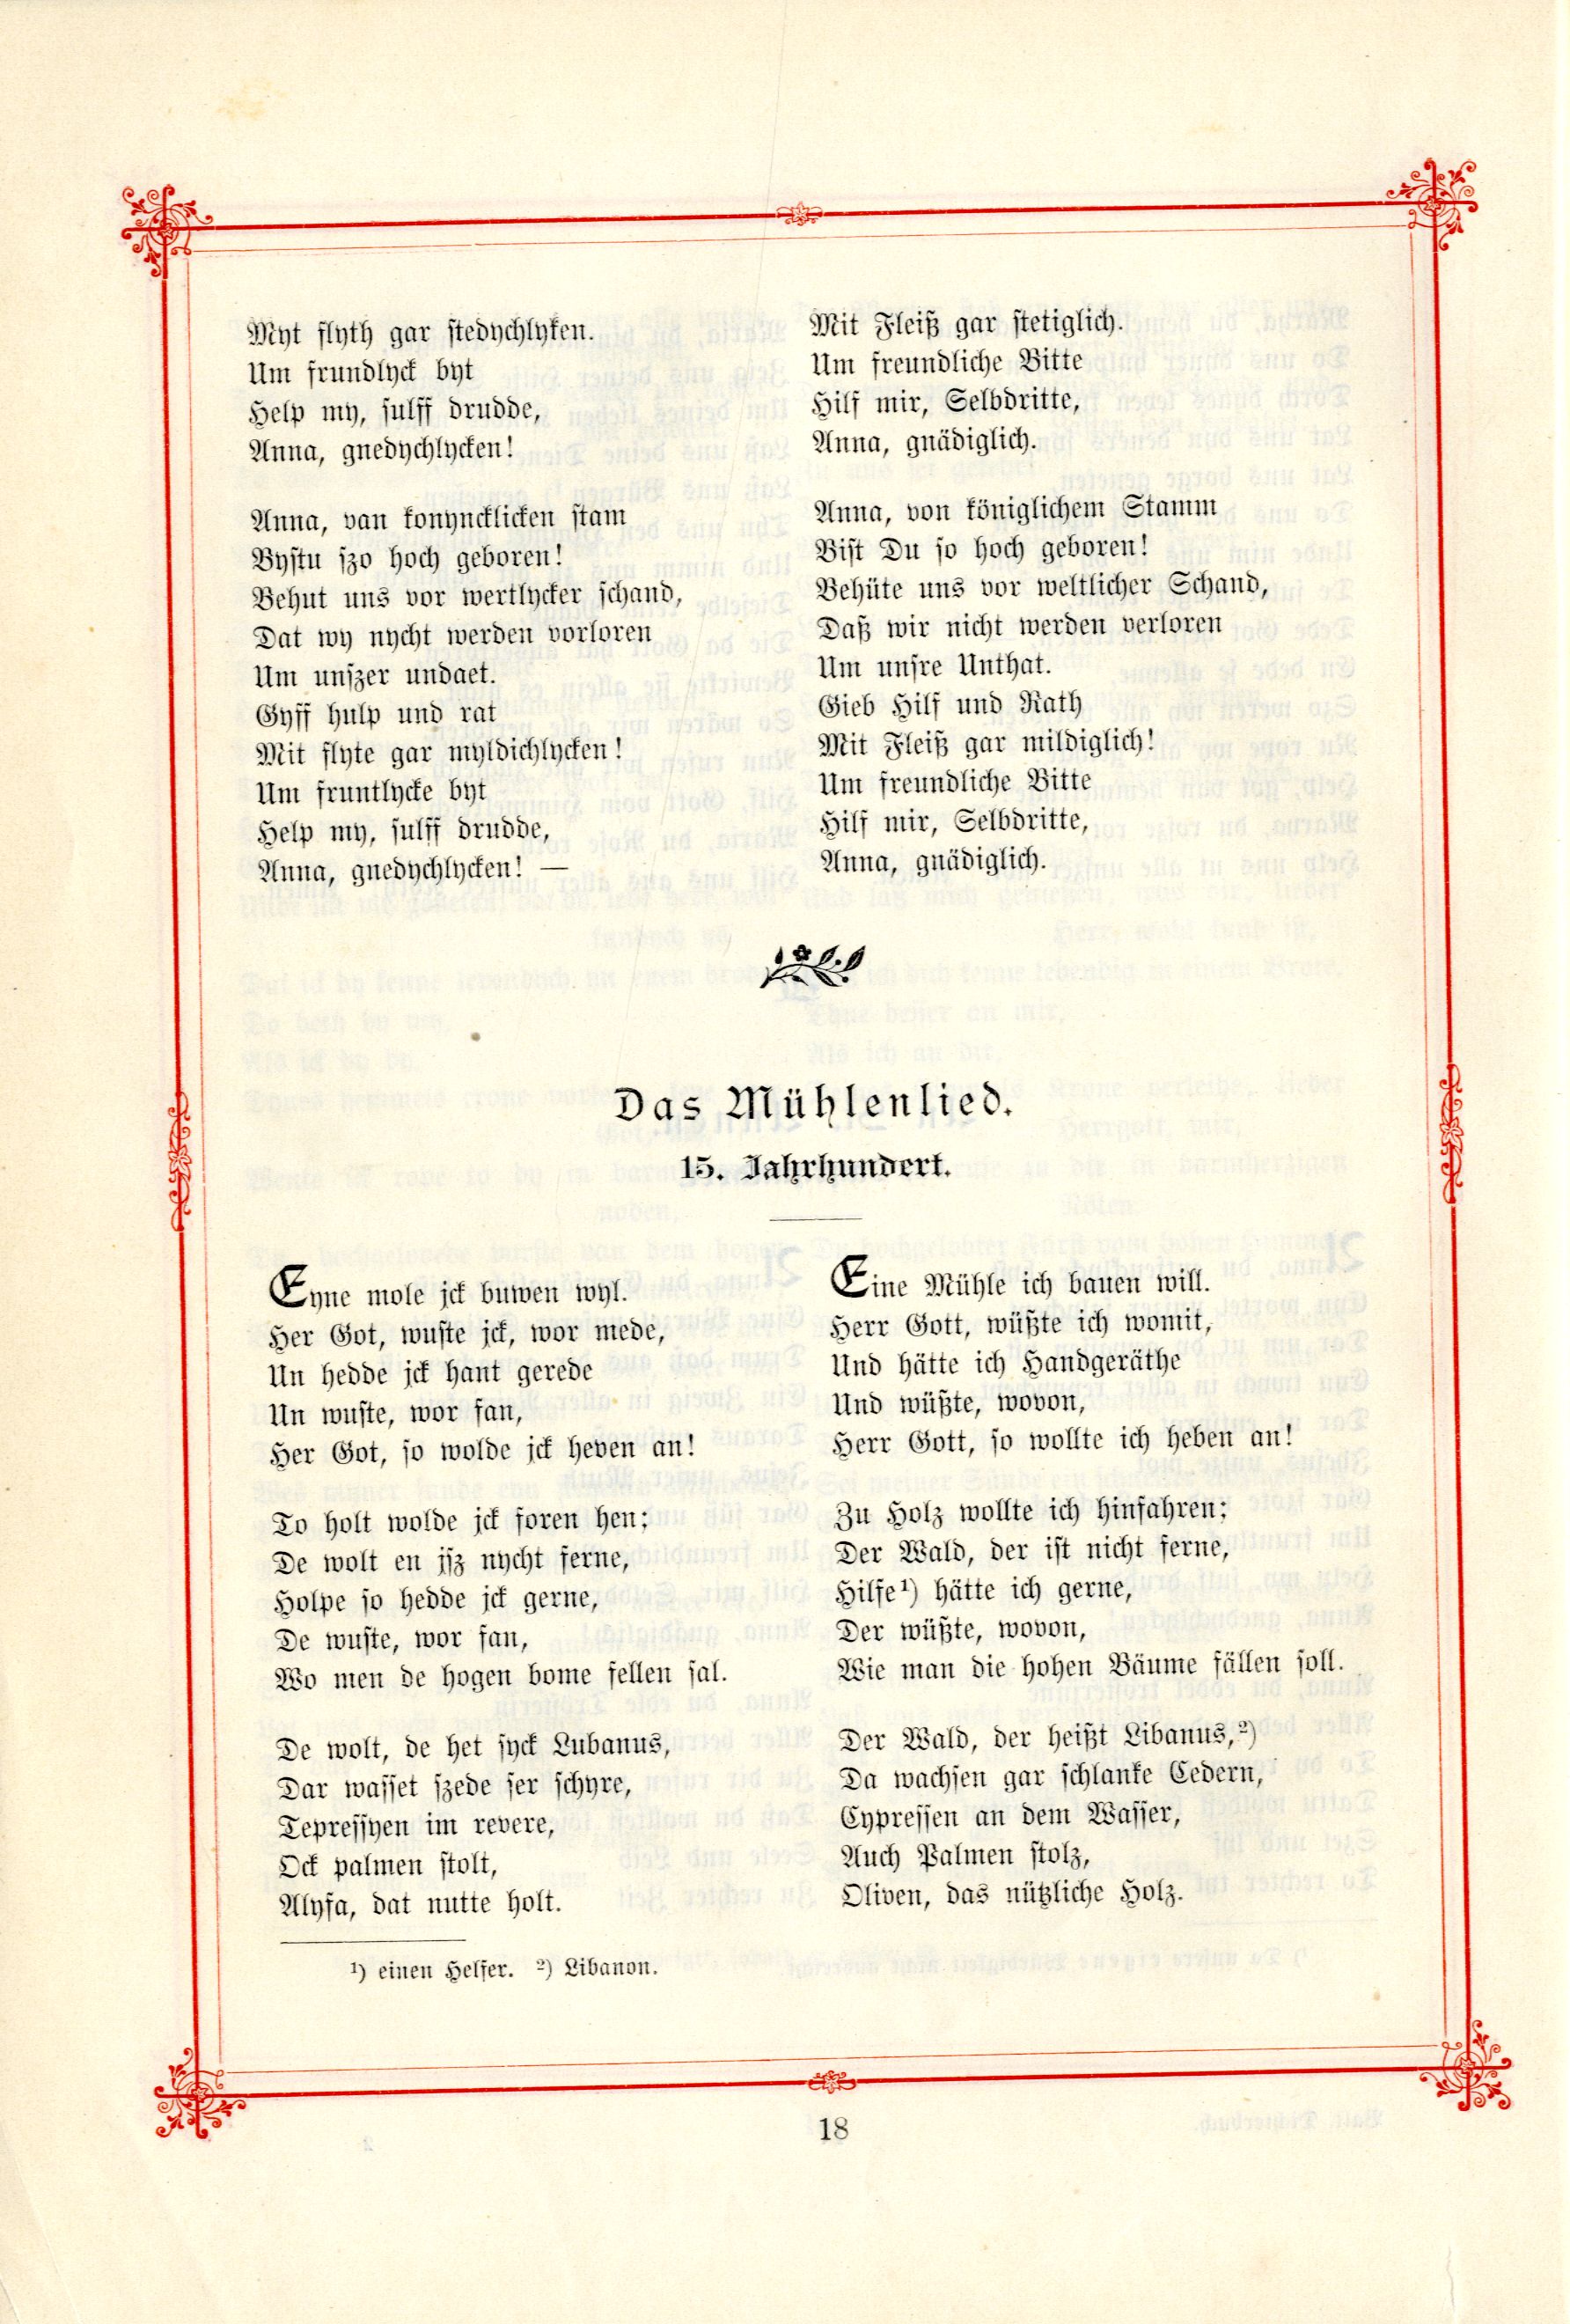 Das Baltische Dichterbuch (1895) | 64. (18) Основной текст